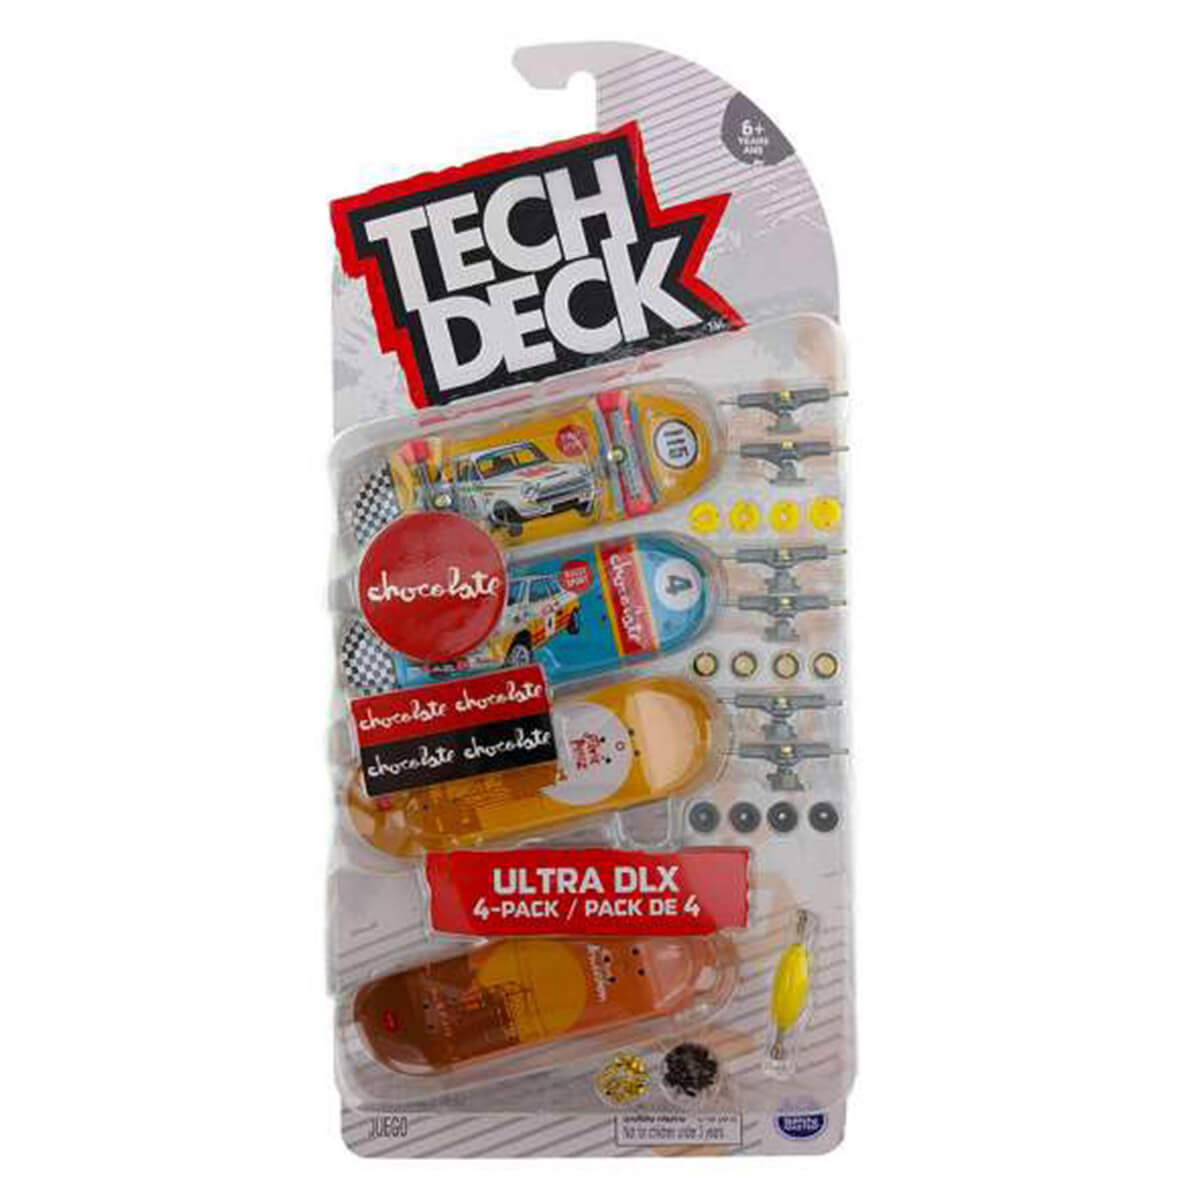 Tech Deck Ultra DLX 4-Pack Chocolate Fingerboard